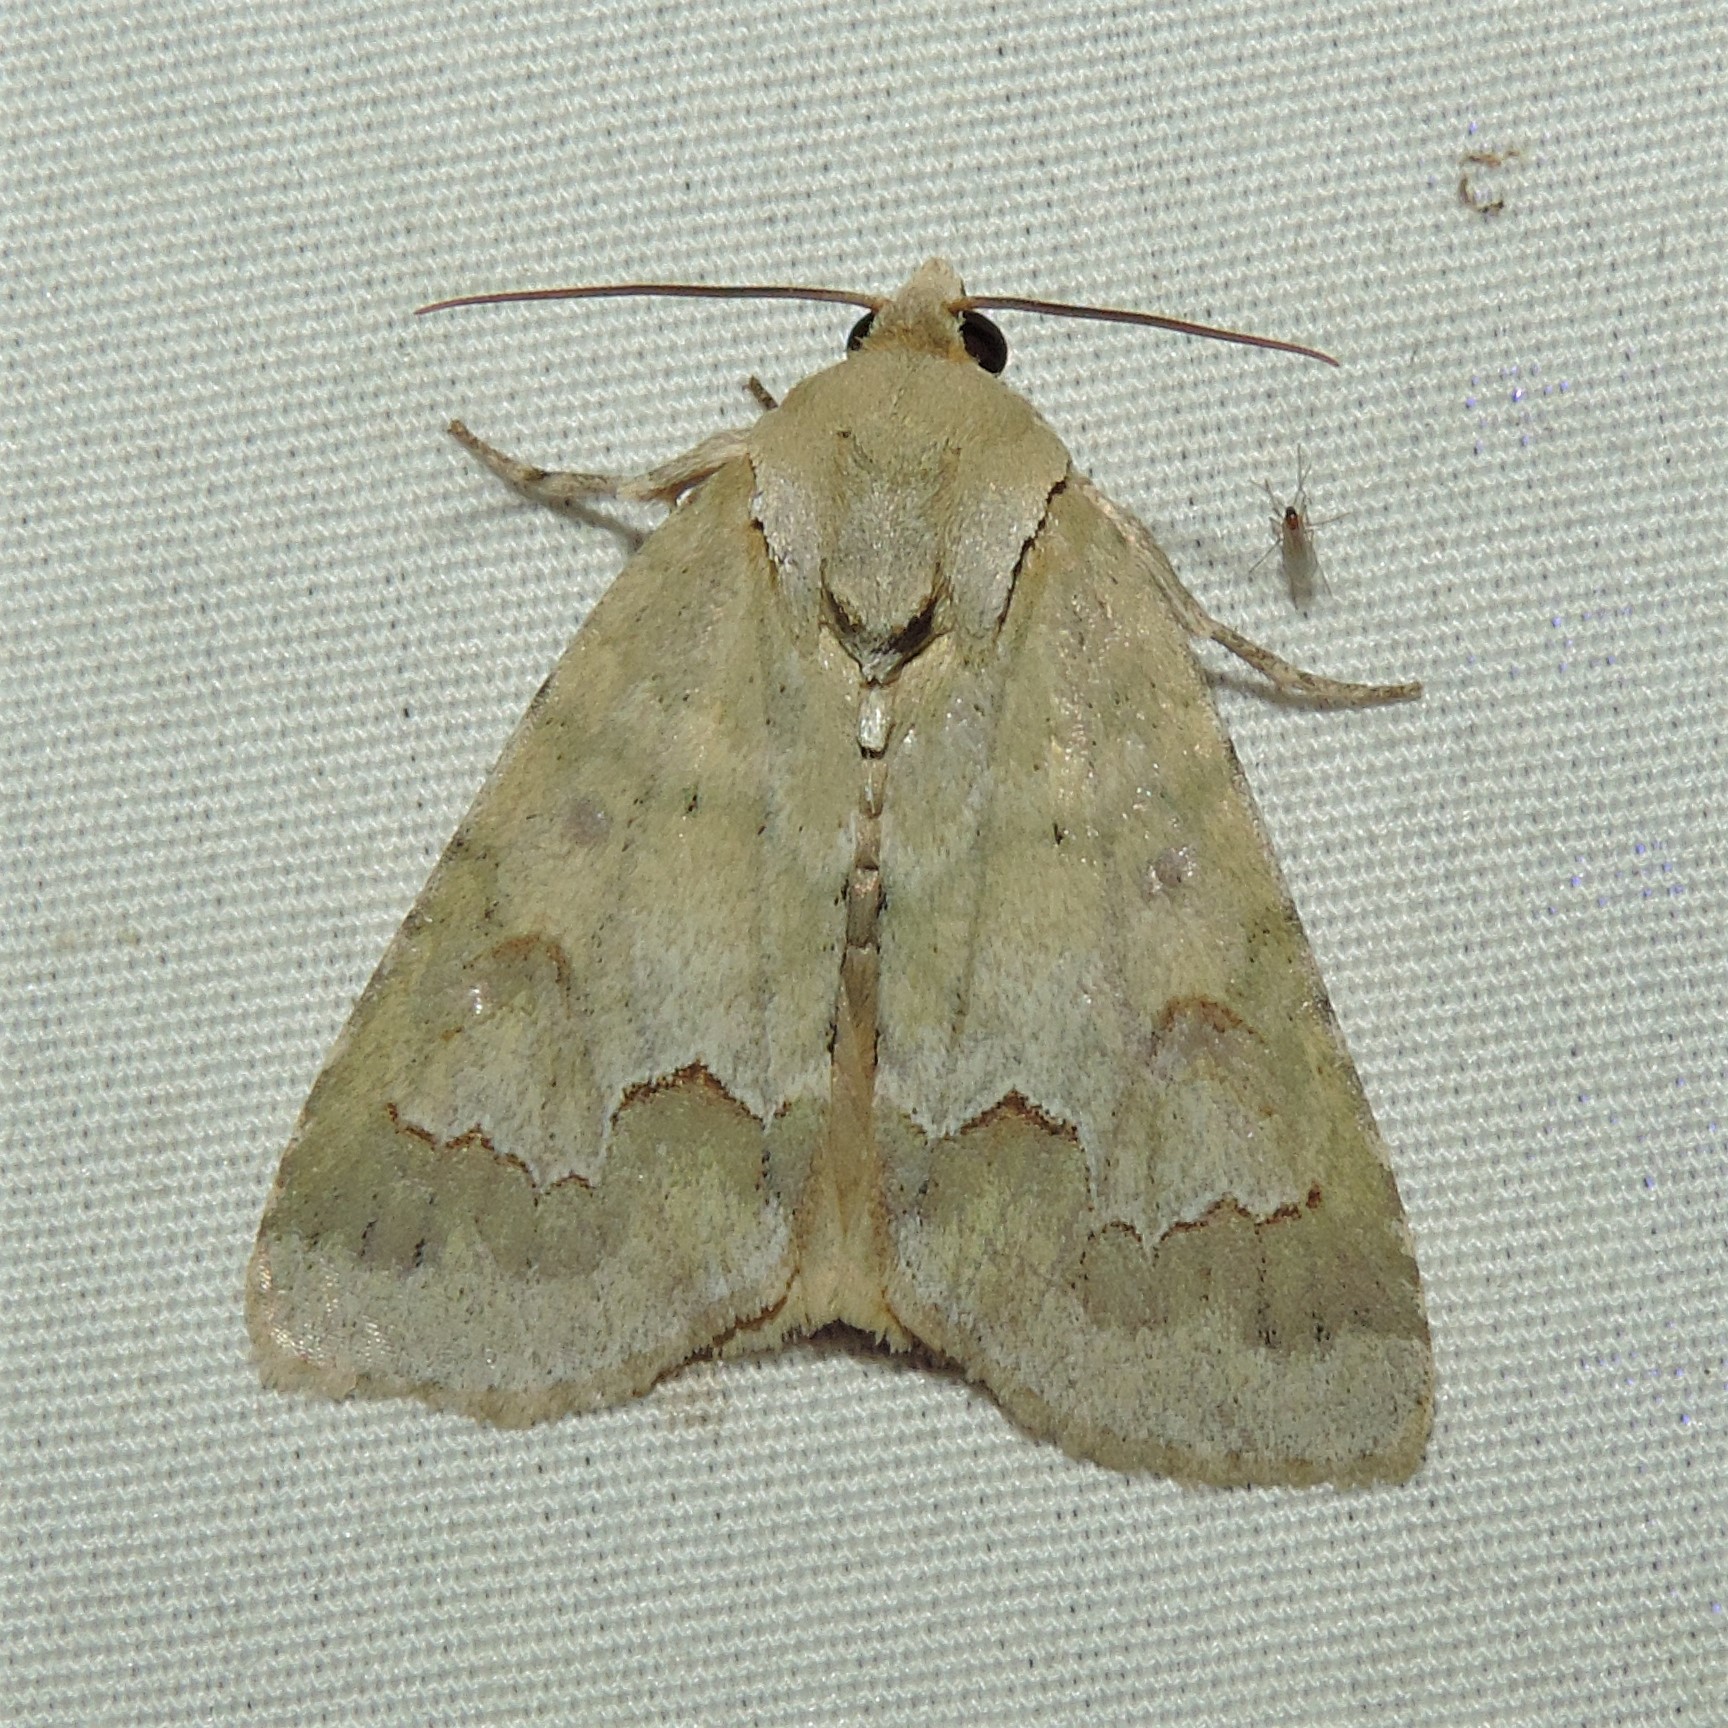 Maryland Biodiversity Project - Birch Dagger Moth (Acronicta betulae)